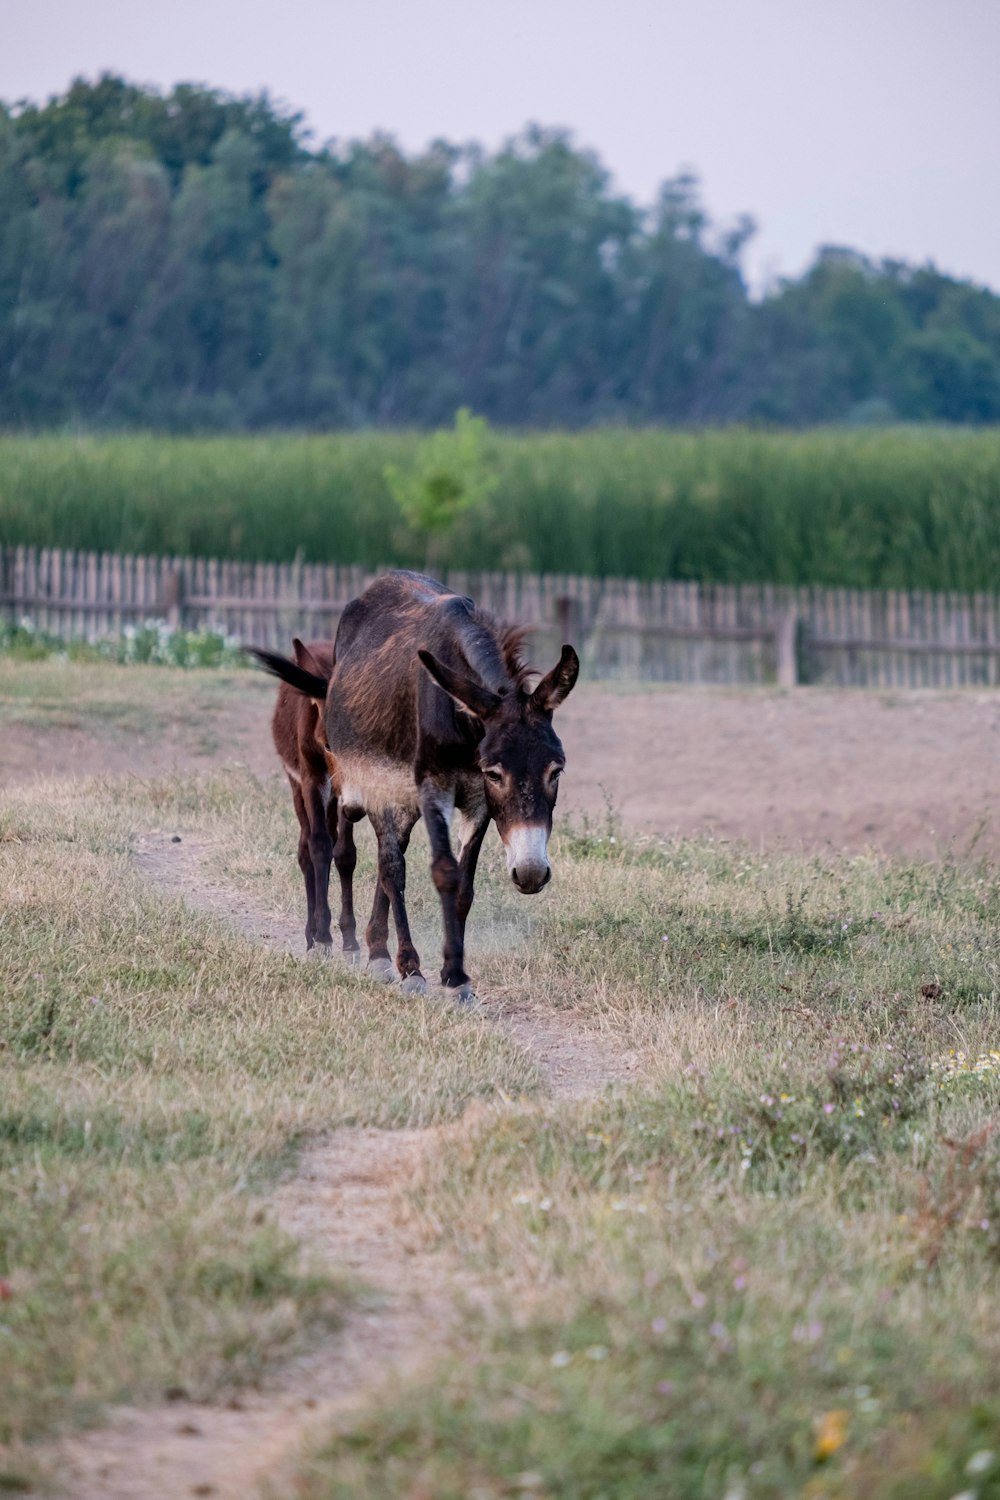 a donkey is walking through a grassy field